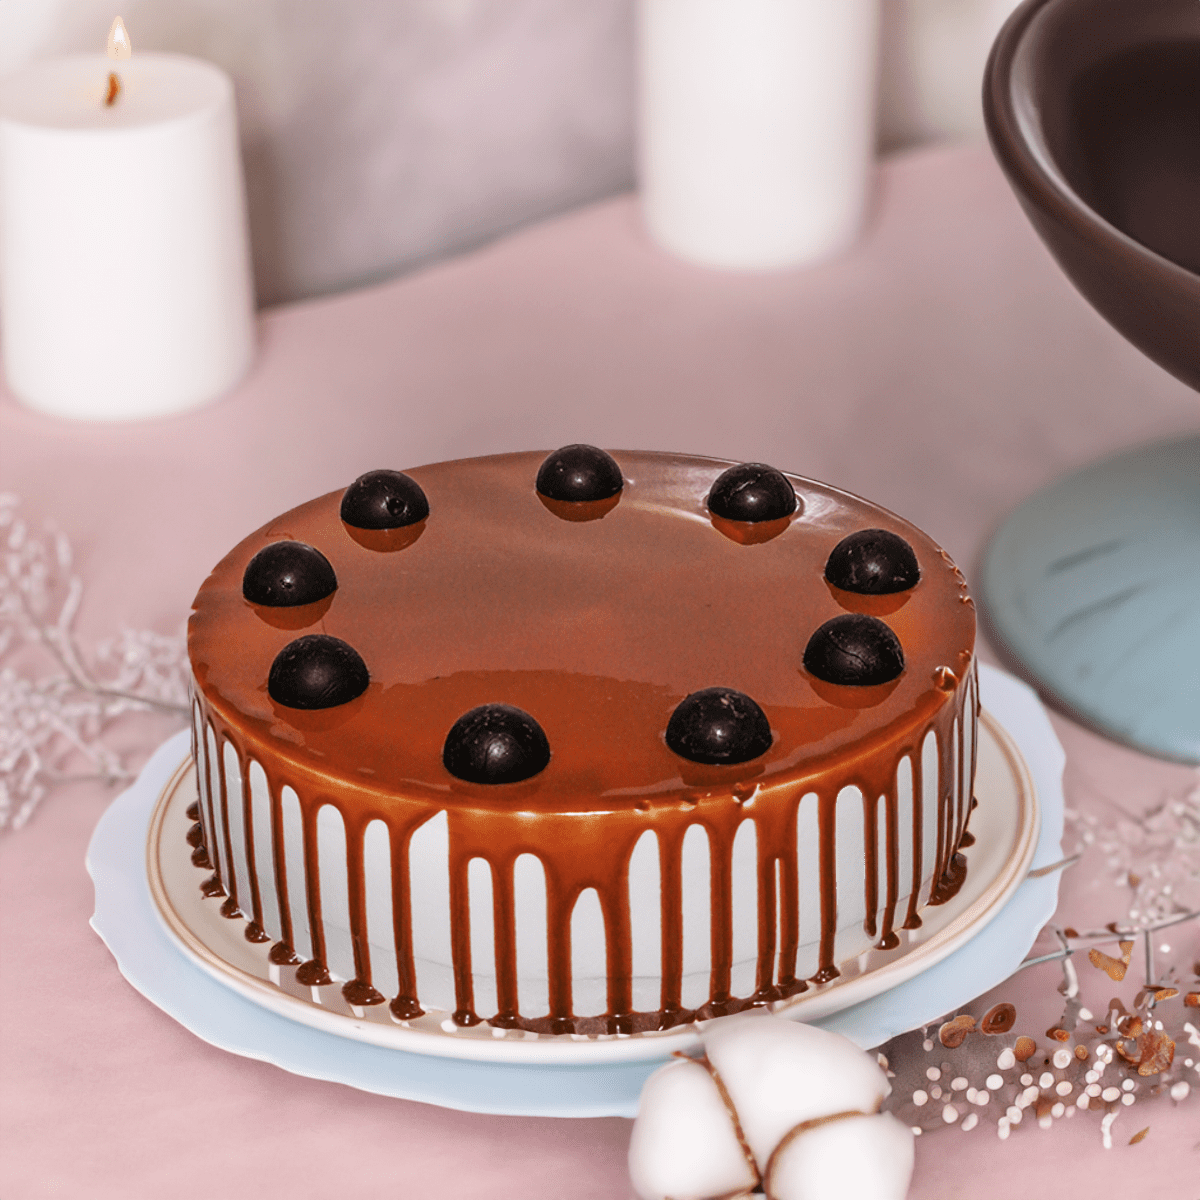 13 Double decker cake ideas | cake, beautiful cakes, wedding cakes